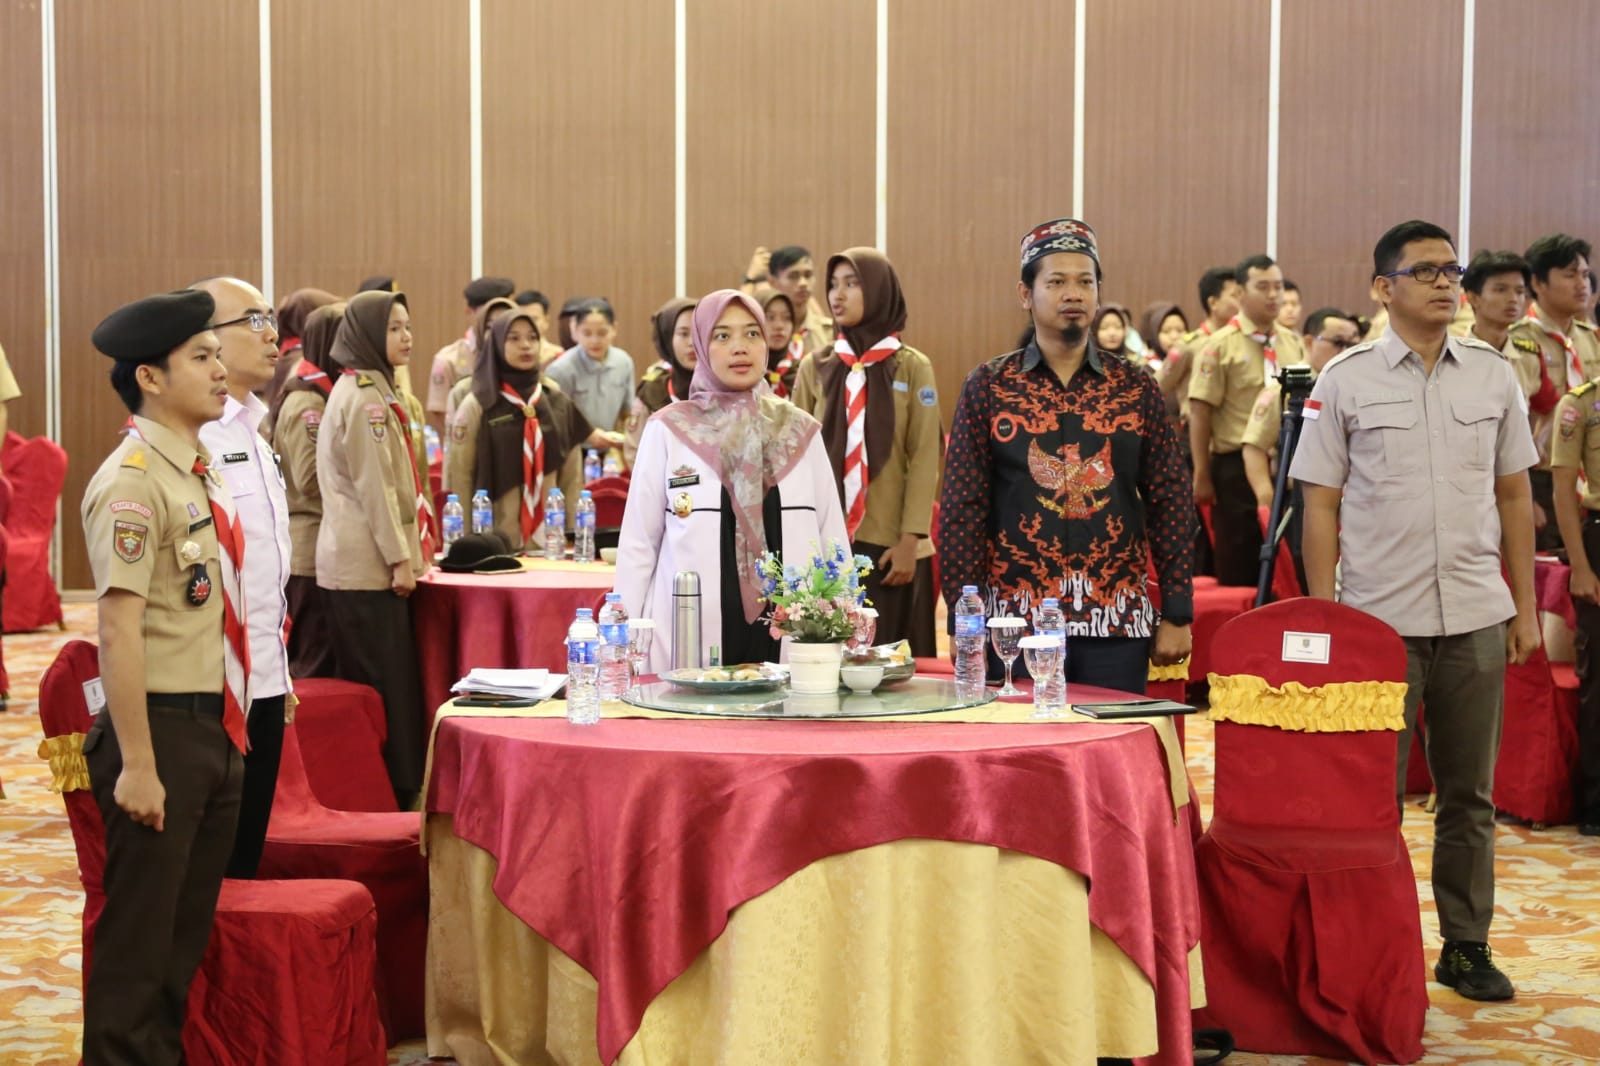 Wagub Chusnunia Buka Sosialisasi Pencegahan Ekstremisme yang Diikuti Anggota dan Pengurus Kwarda Gerakan Pramuka Provinsi Lampung